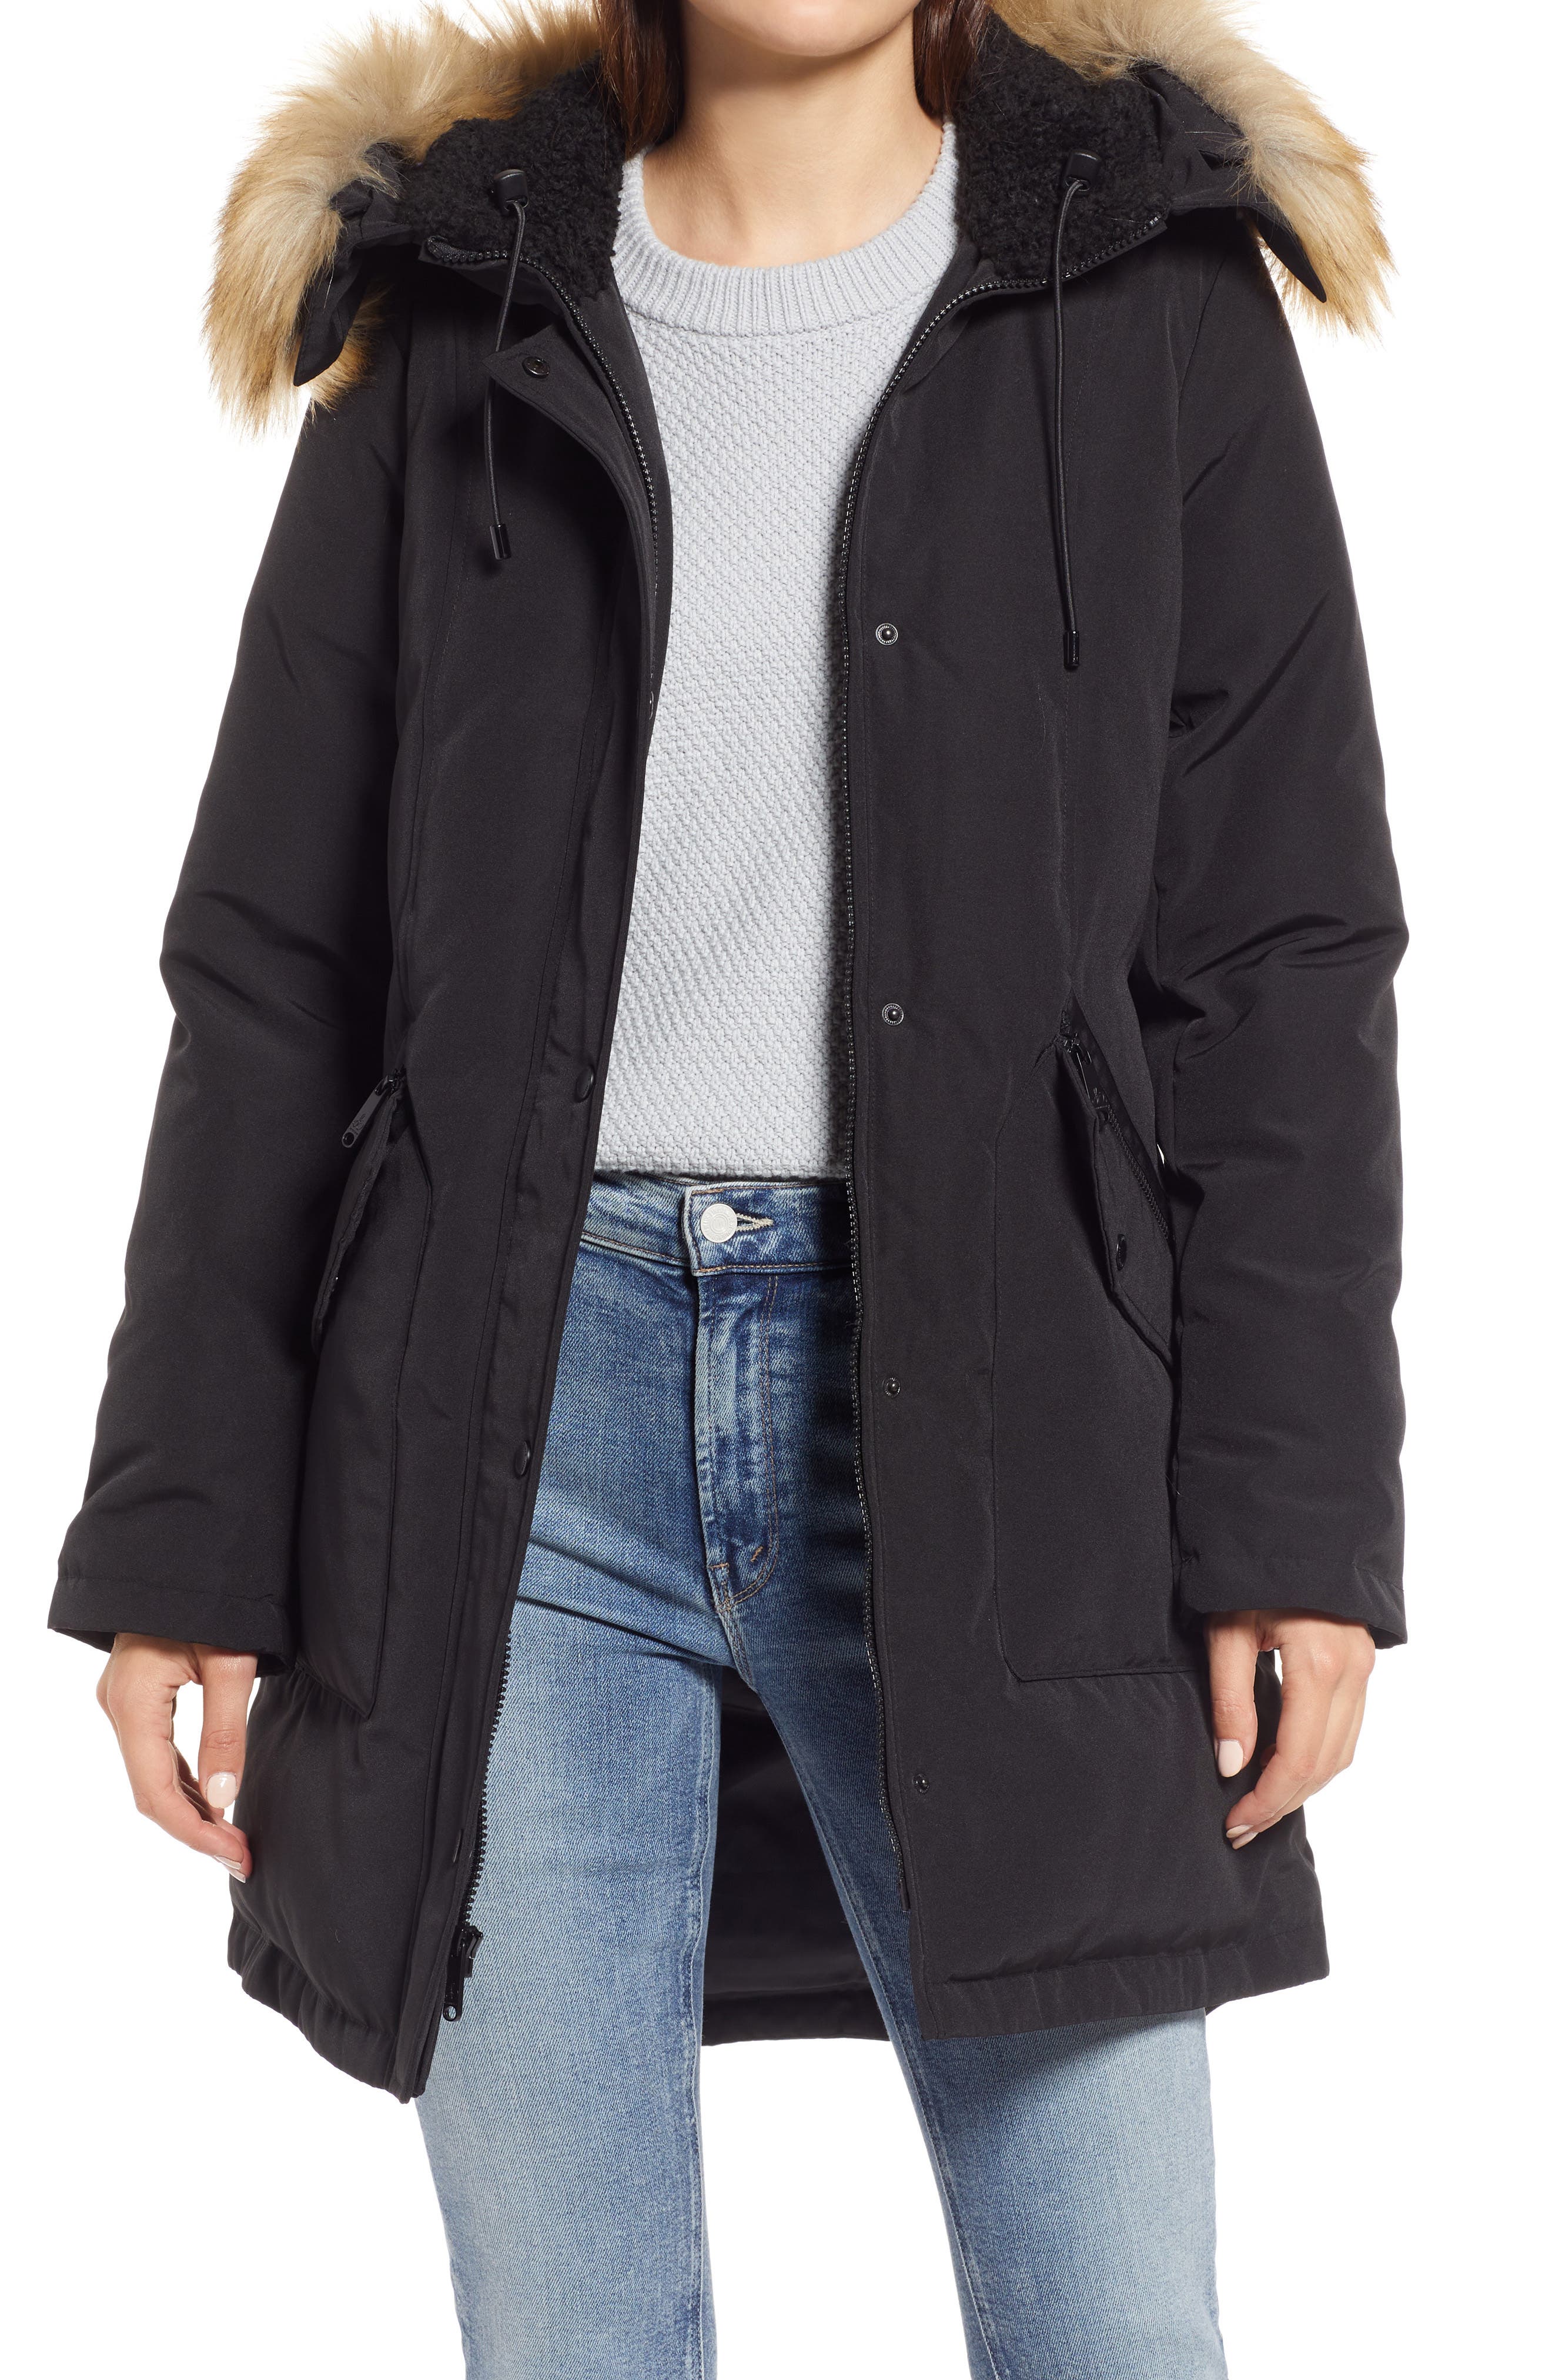 Roxy Ladies Woman's Black Fur Hooded Designer Soft Leather Duffle Jacket Coat 